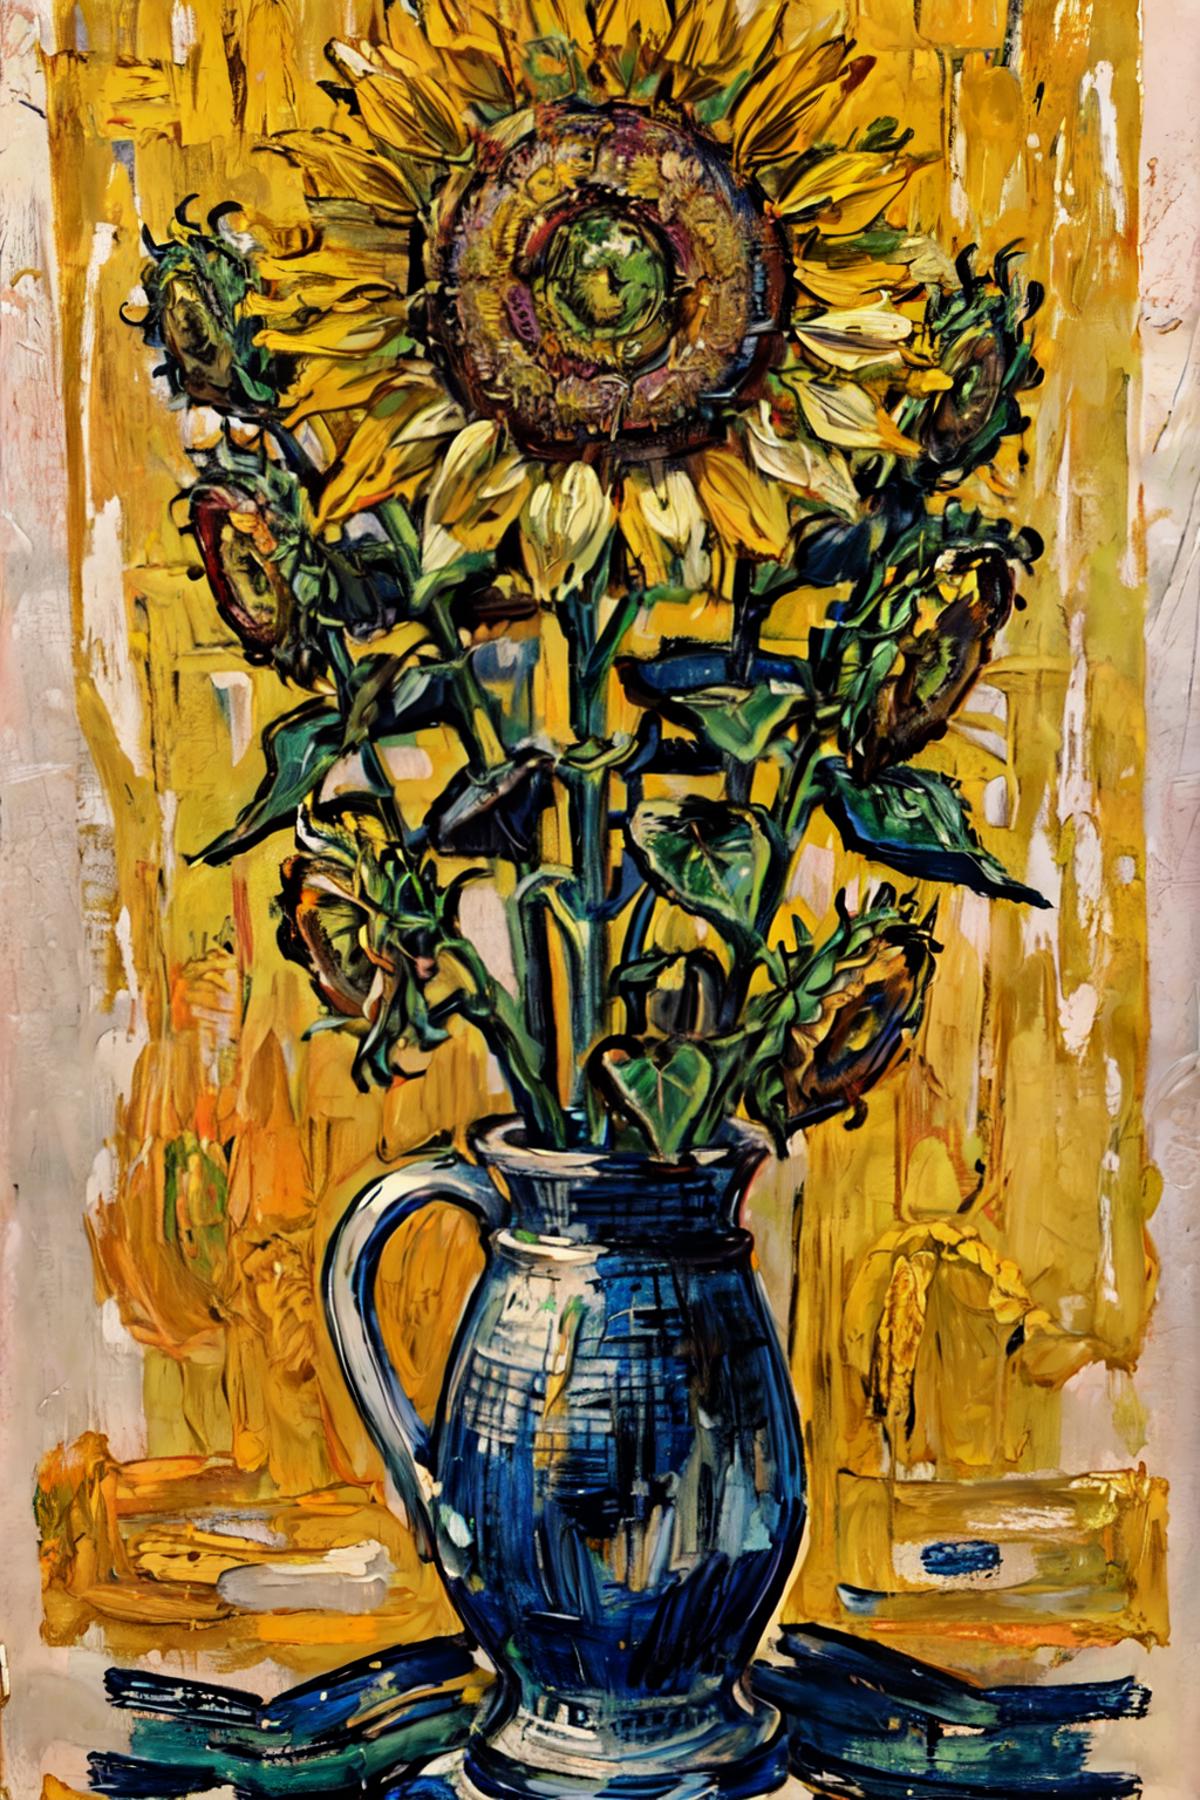 Van Gogh Style image by kokurine